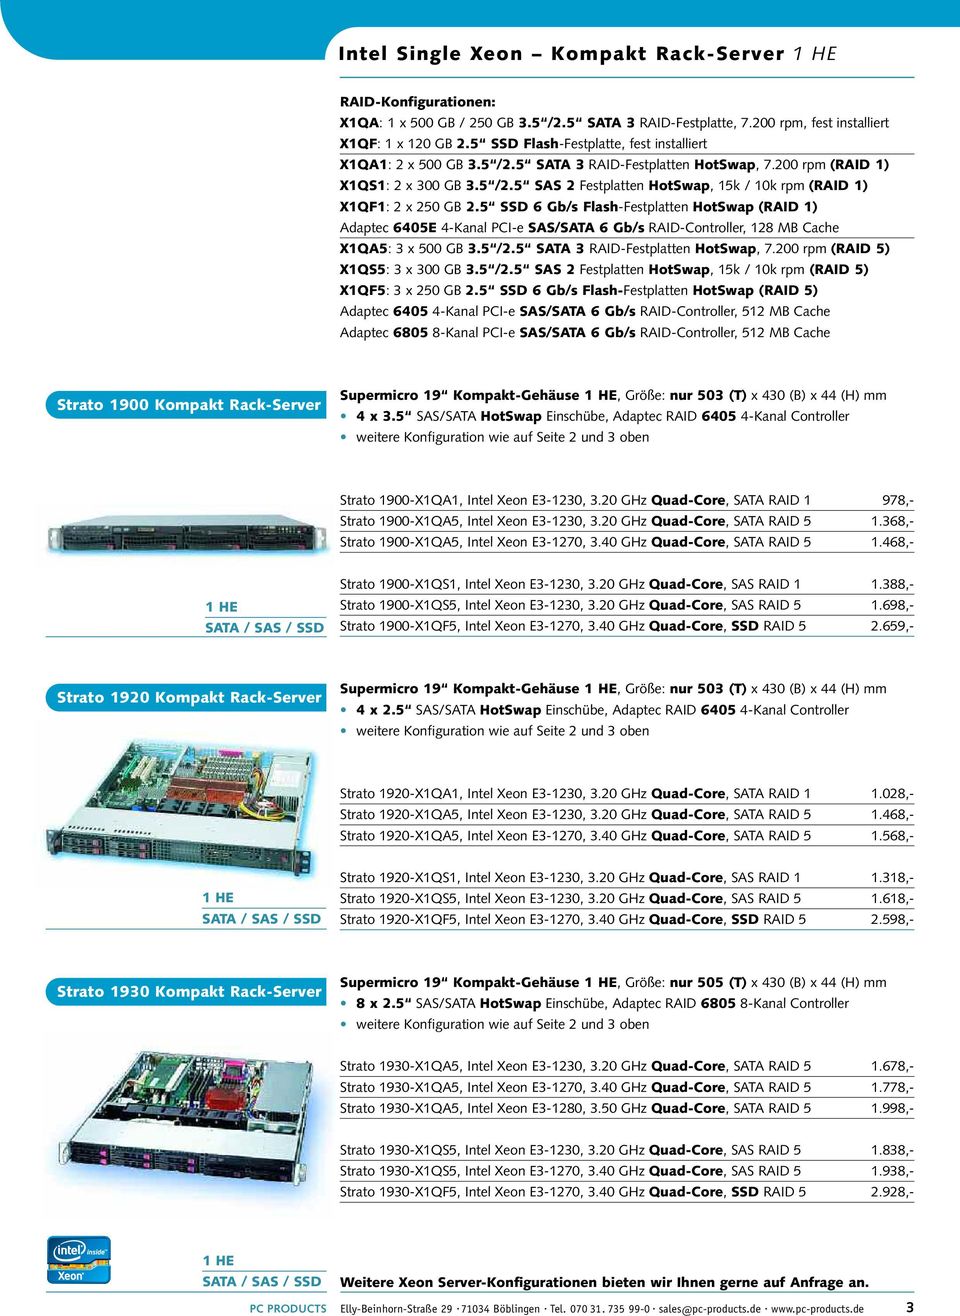 5 SSD 6 Gb/s Flash-Festplatten HotSwap (RAID 1) Adaptec 6405E 4-Kanal PCI-e SAS/SATA 6 Gb/s RAID-Controller, 128 MB Cache X1QA5: 3 x 500 GB 3.5 /2.5 SATA 3 RAID-Festplatten HotSwap, 7.